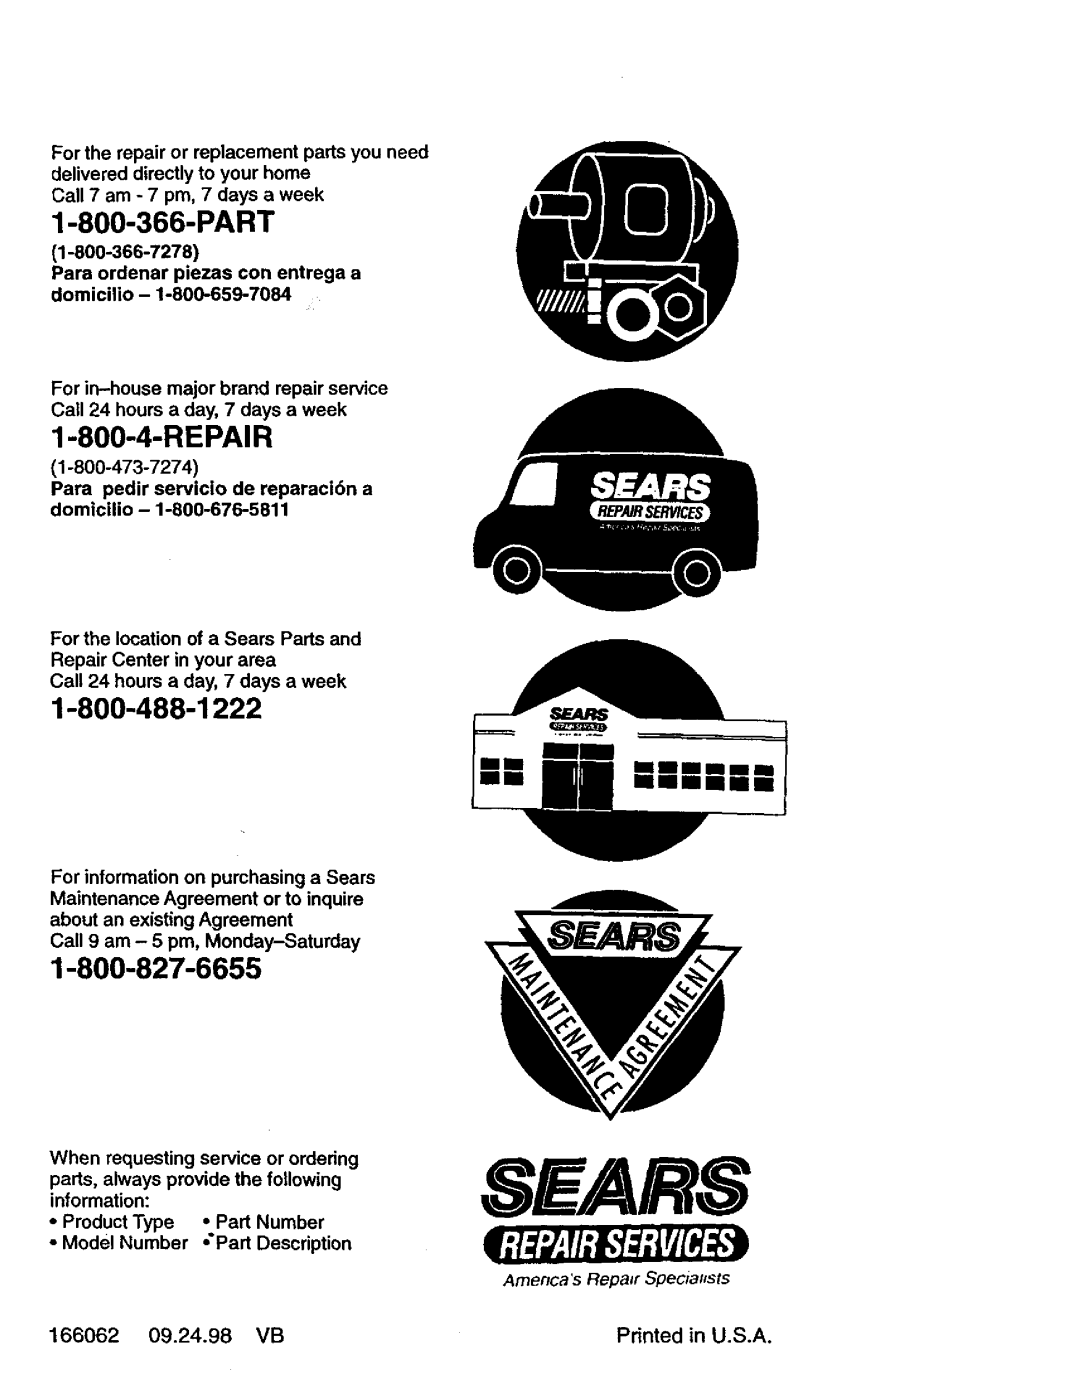 Craftsman 917.377582 owner manual Part, Repair, 166062, 09.24.98, Sears, mummmm, Americas Flepa r Specialists 